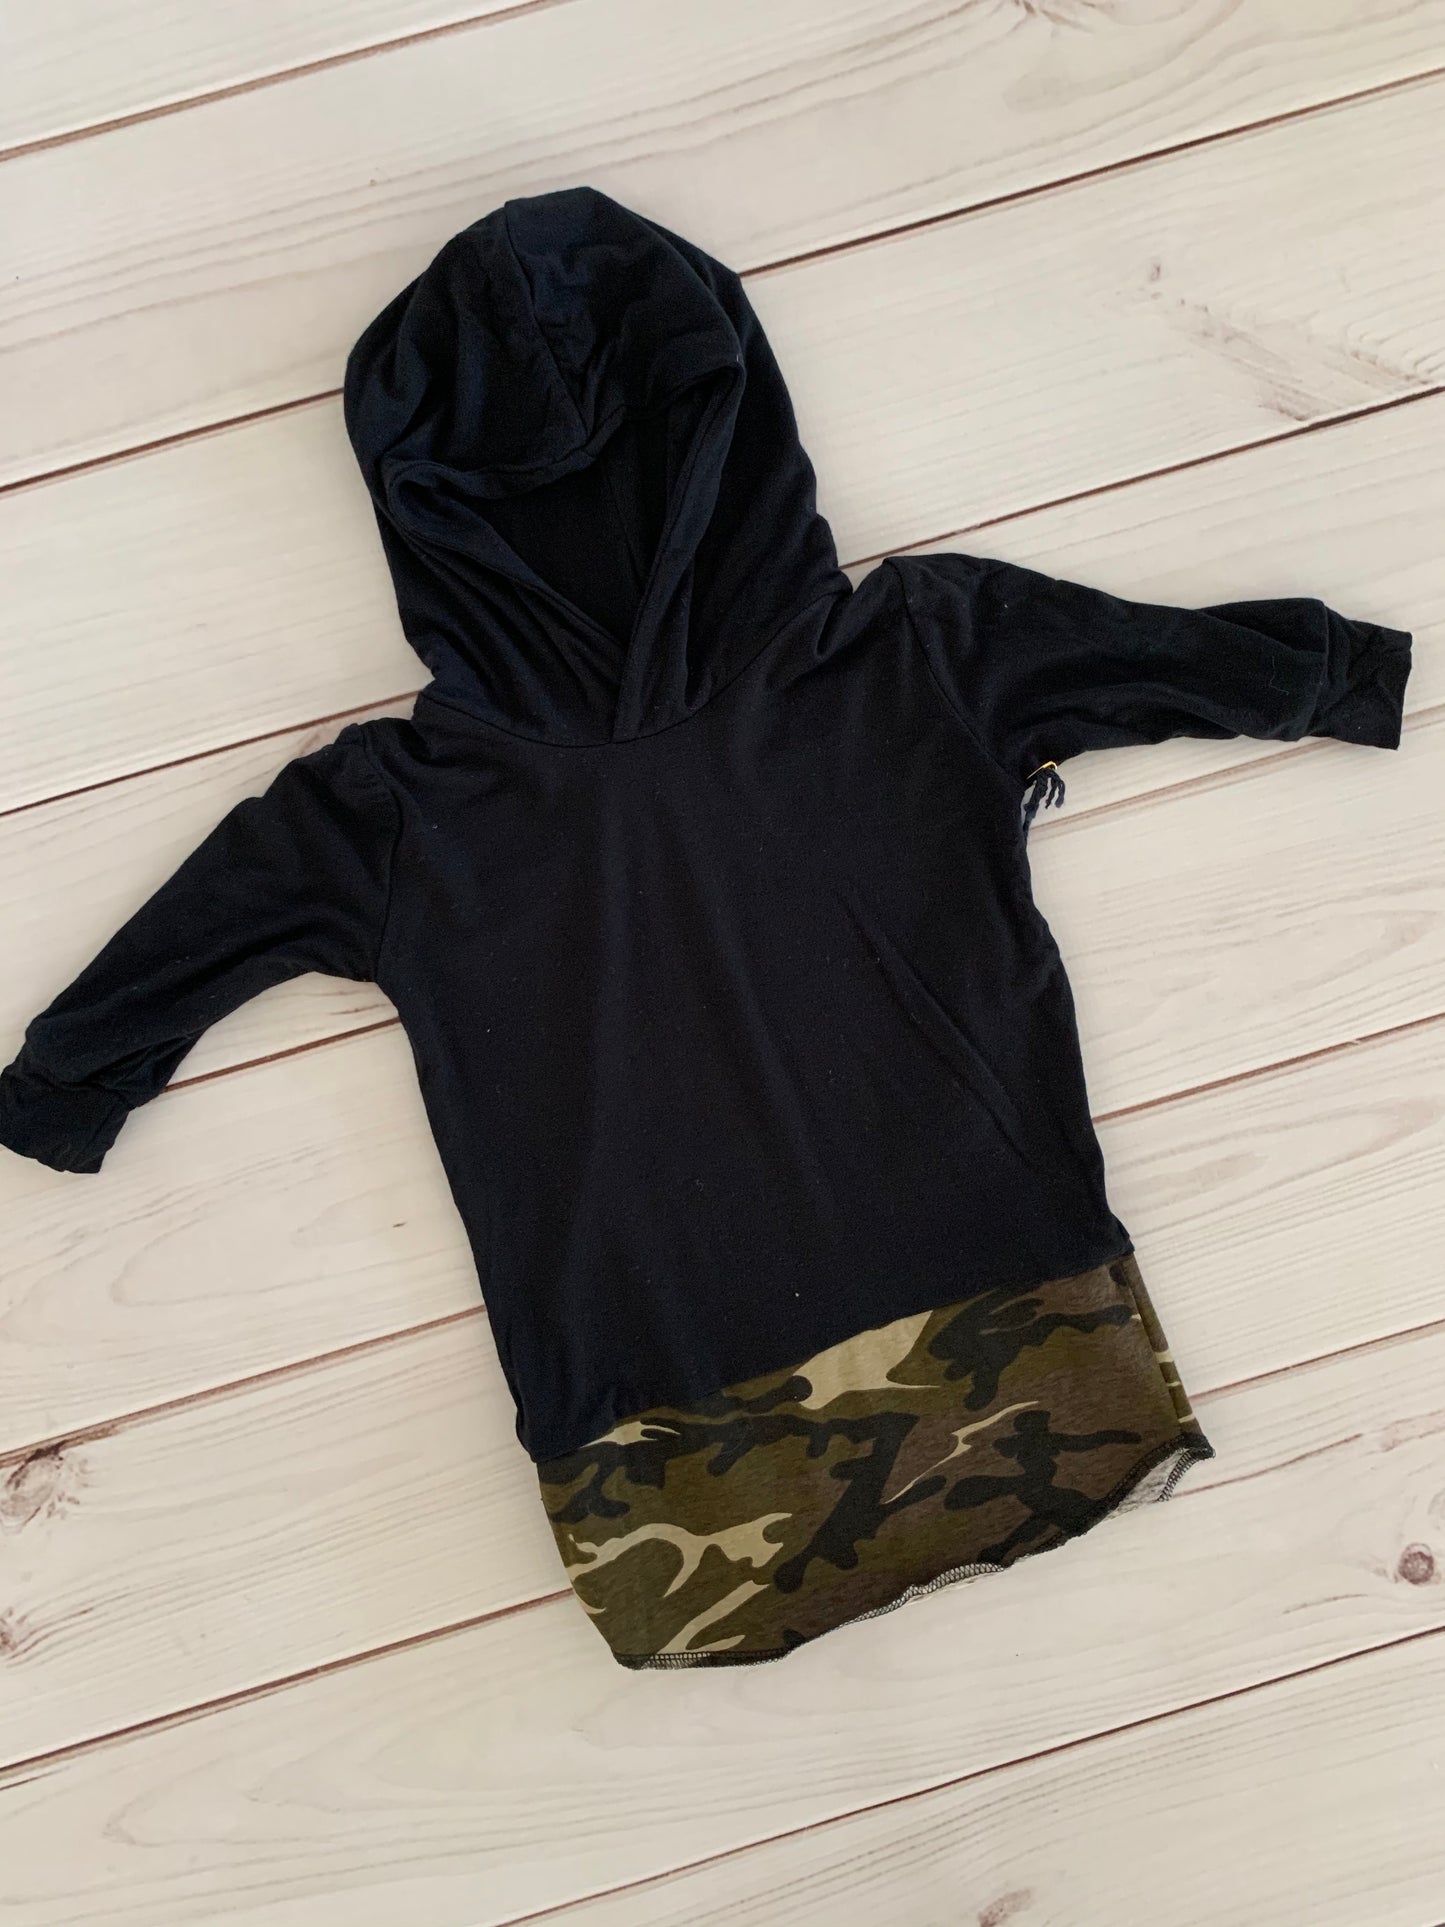 SALE Black / camo hoodie